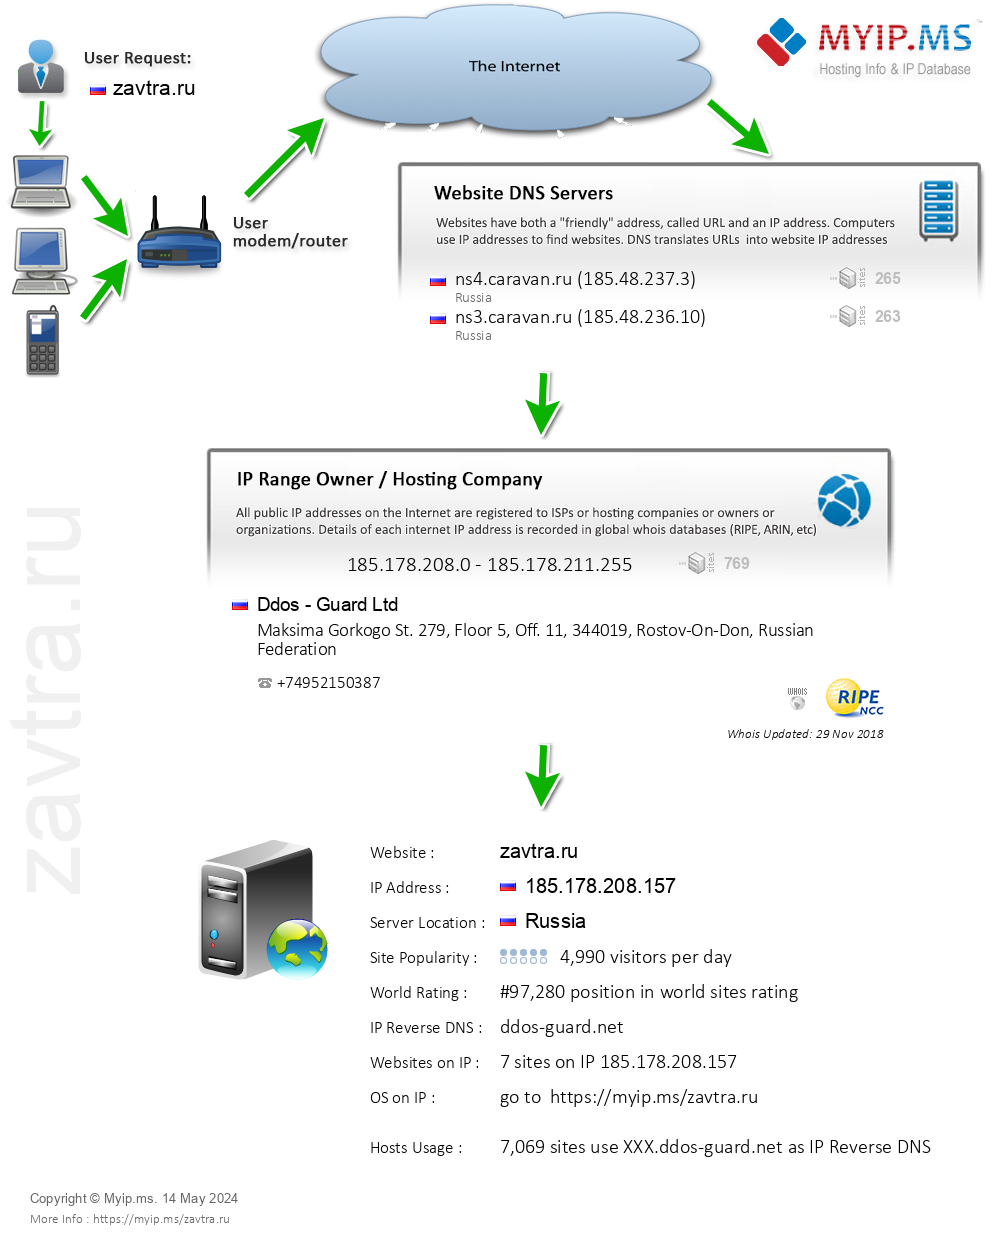 Zavtra.ru - Website Hosting Visual IP Diagram